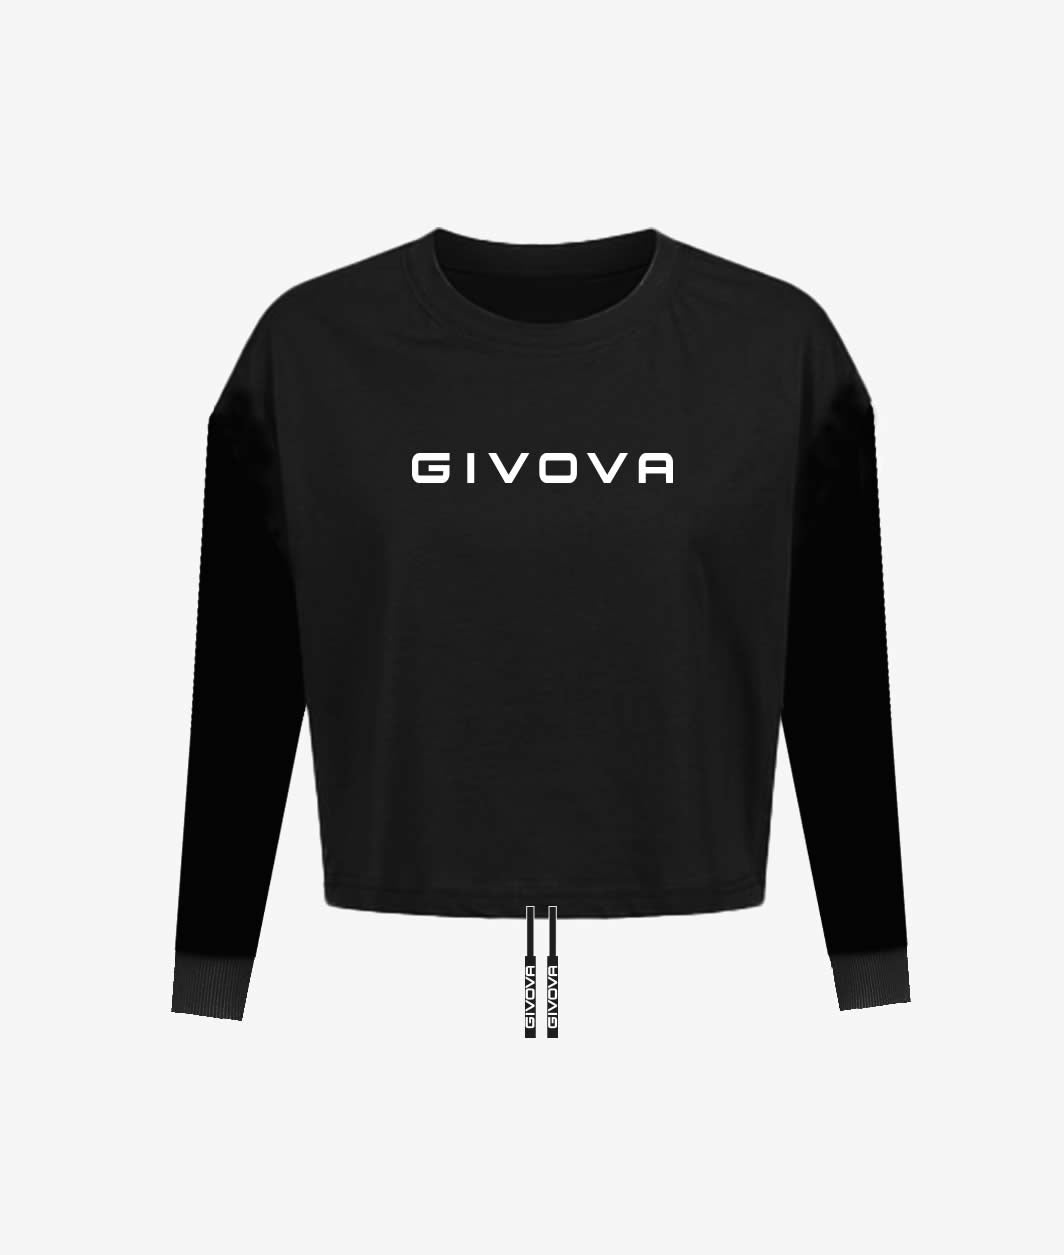 Givova Long Sleeve Shirt - black, FIT016-0010